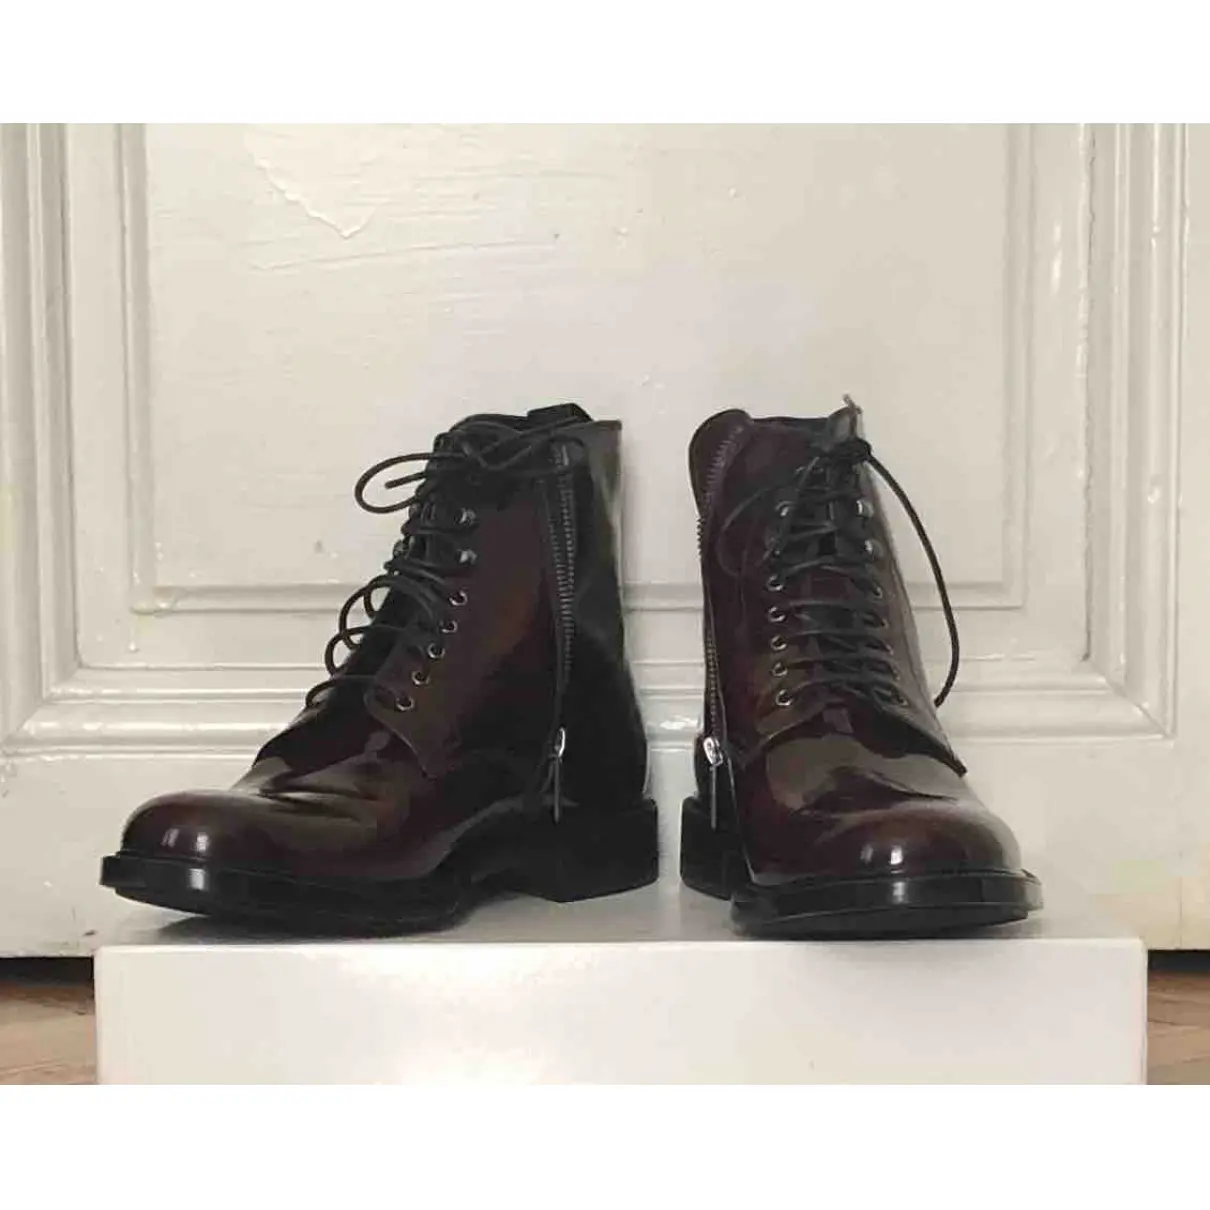 Buy Giorgio Armani Patent leather boots online